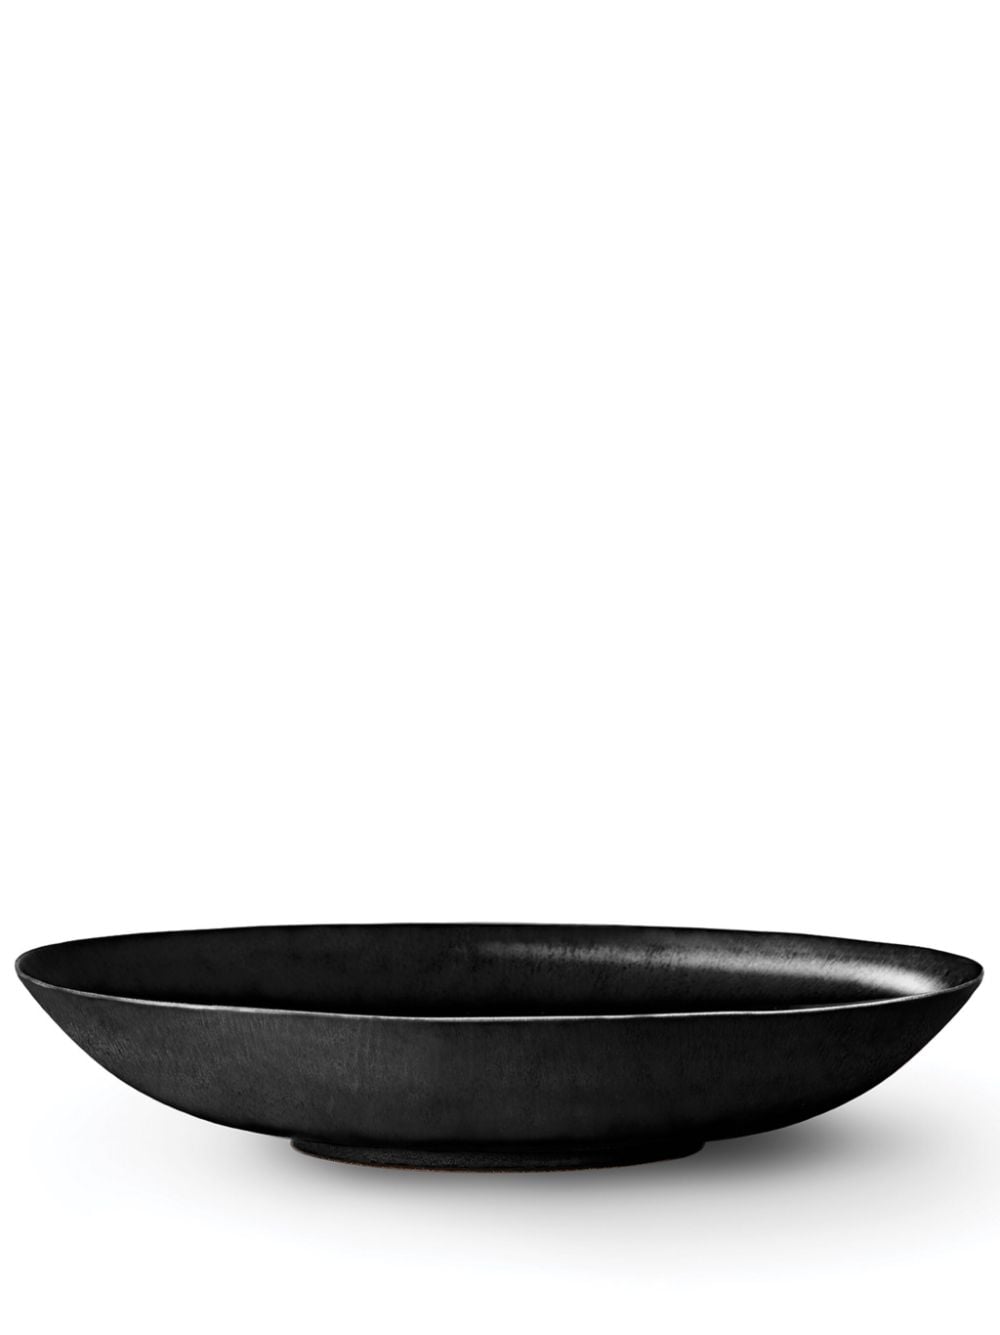 L'Objet Terra porcelain bowl (30cm) - Black von L'Objet